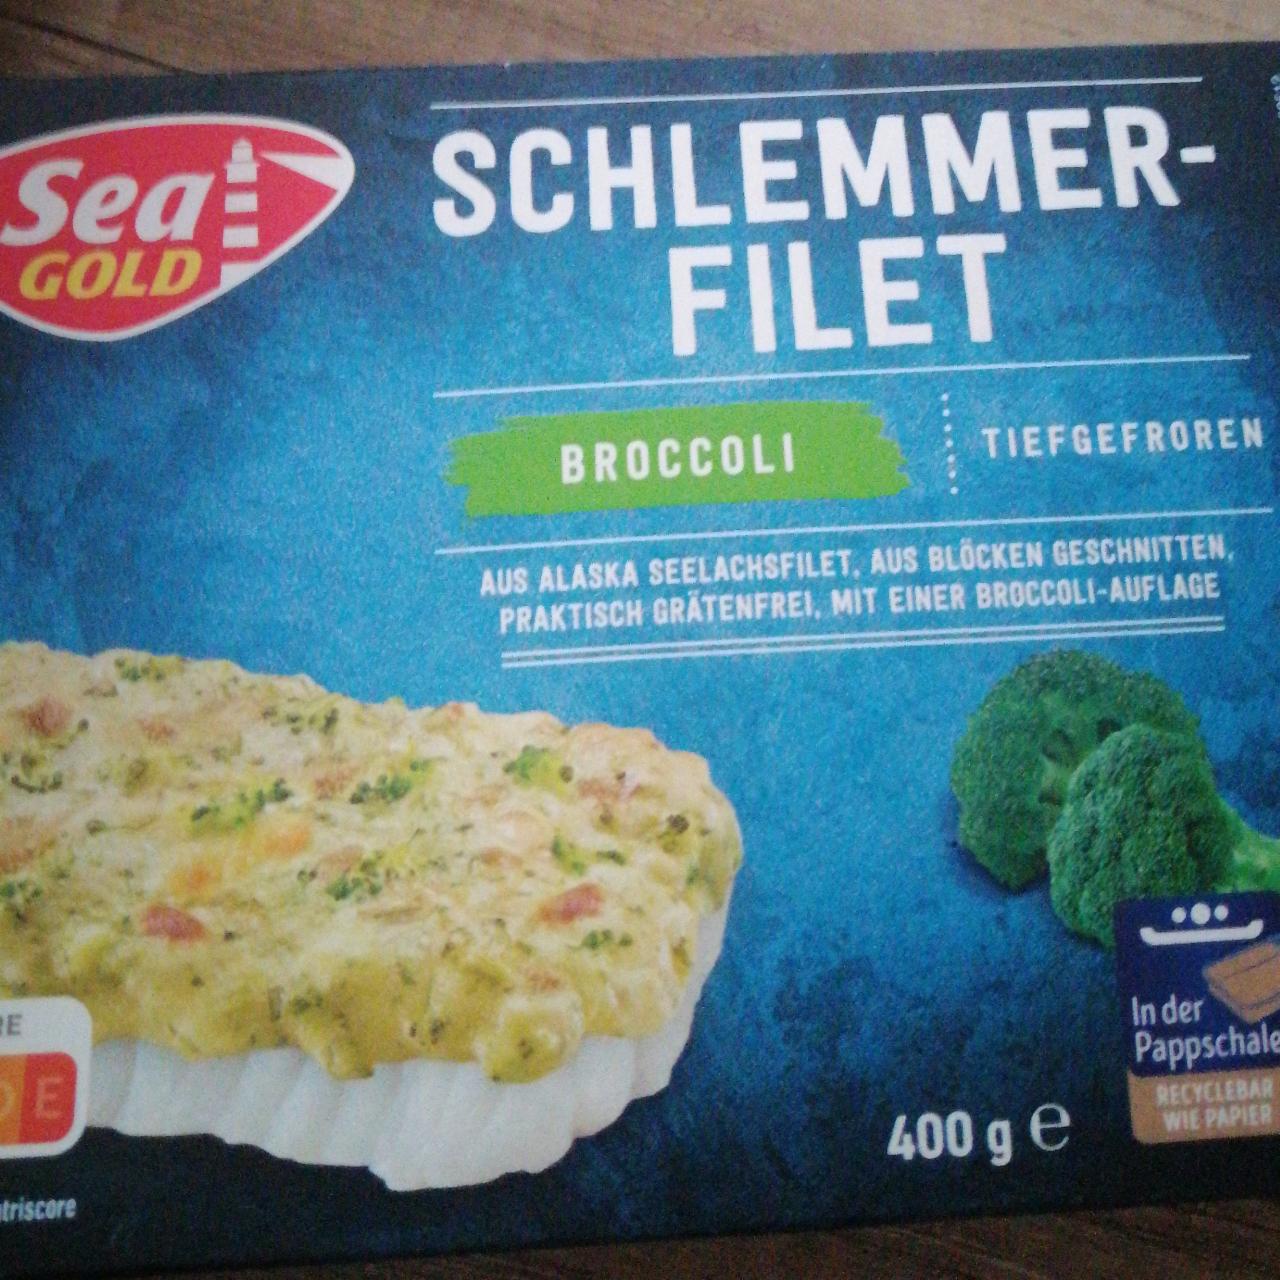 Fotografie - Schlemmer Filet Broccoli Sea Gold